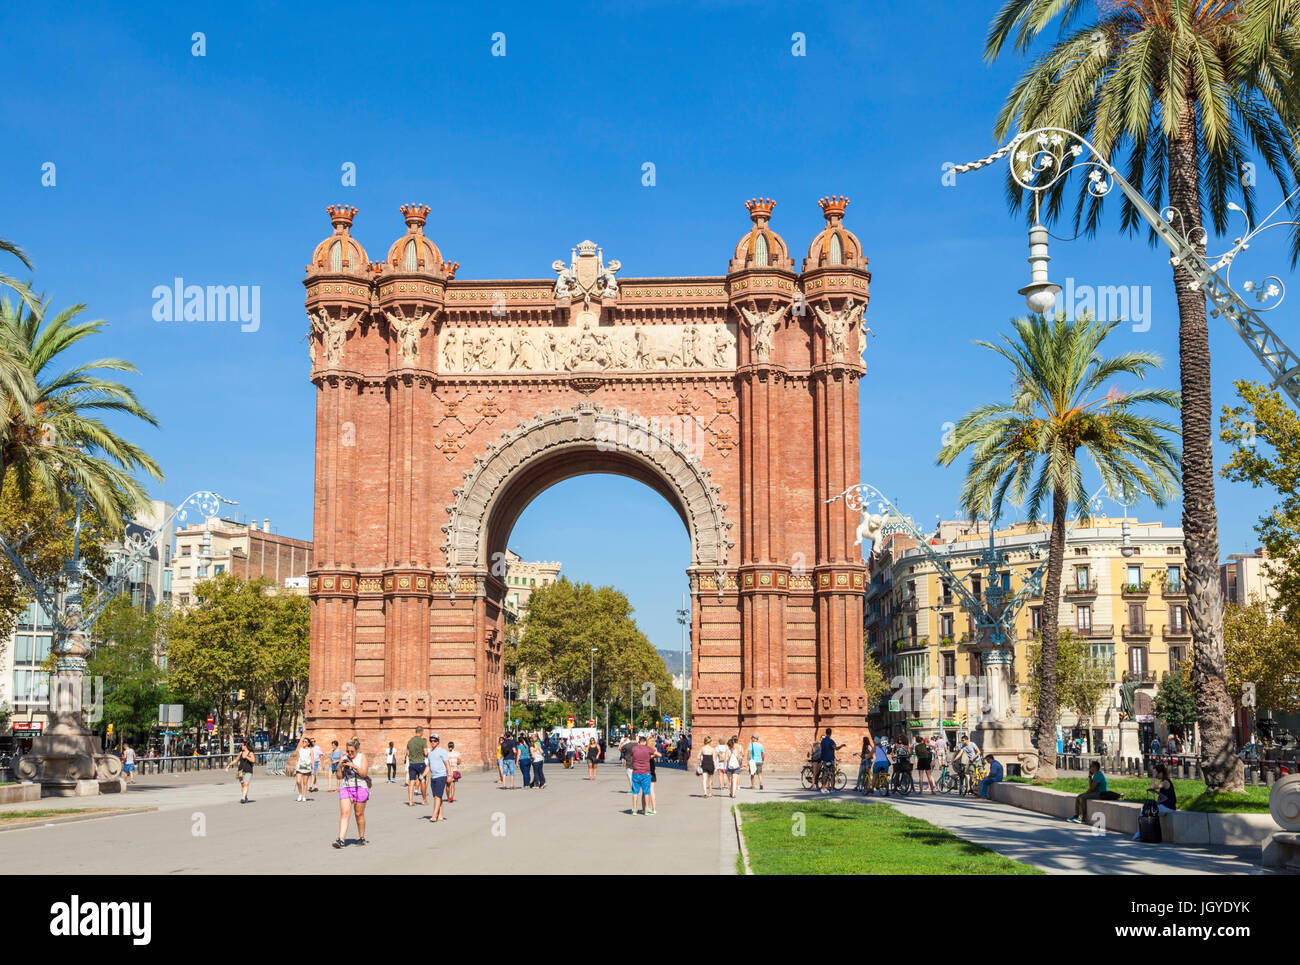 Barcelona Catalunya The Arc de Triomf de Barcelona Arco de Triunfo de Barcelona triumphal arch Barcelona arc de triomphe spain eu europe Catalonia Stock Photo